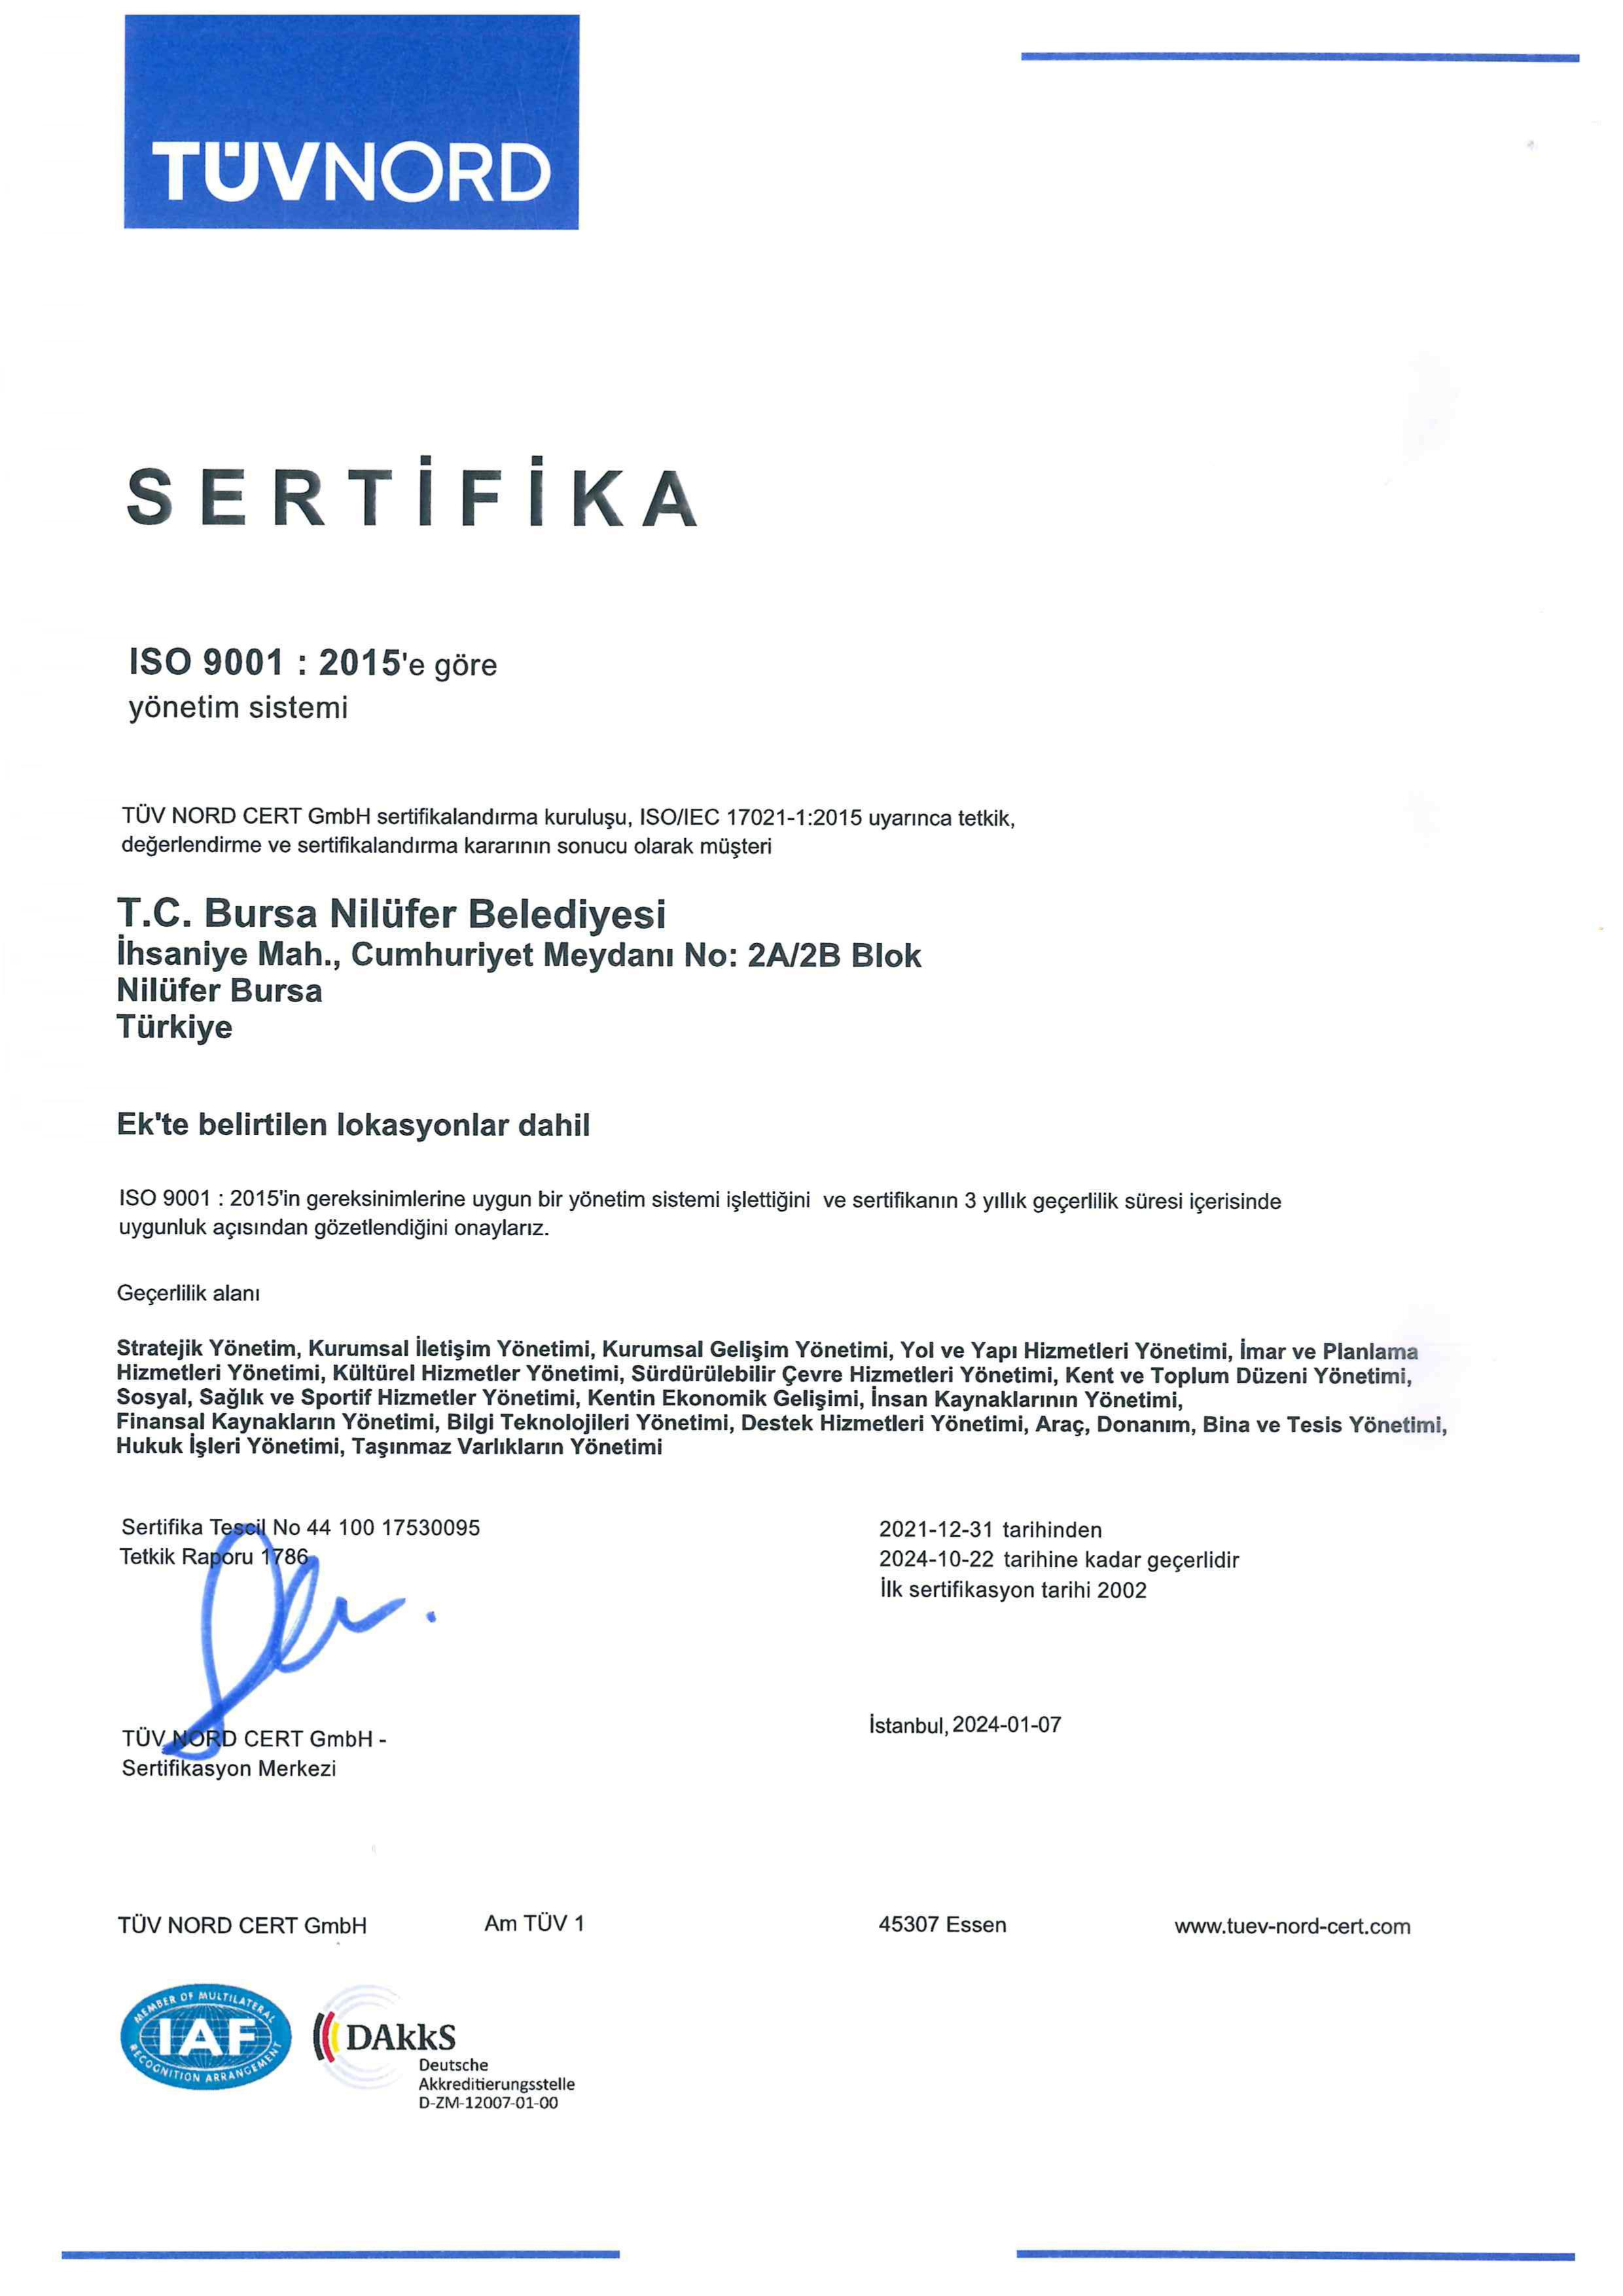 ISO 9001 2015.jpg (390 KB)